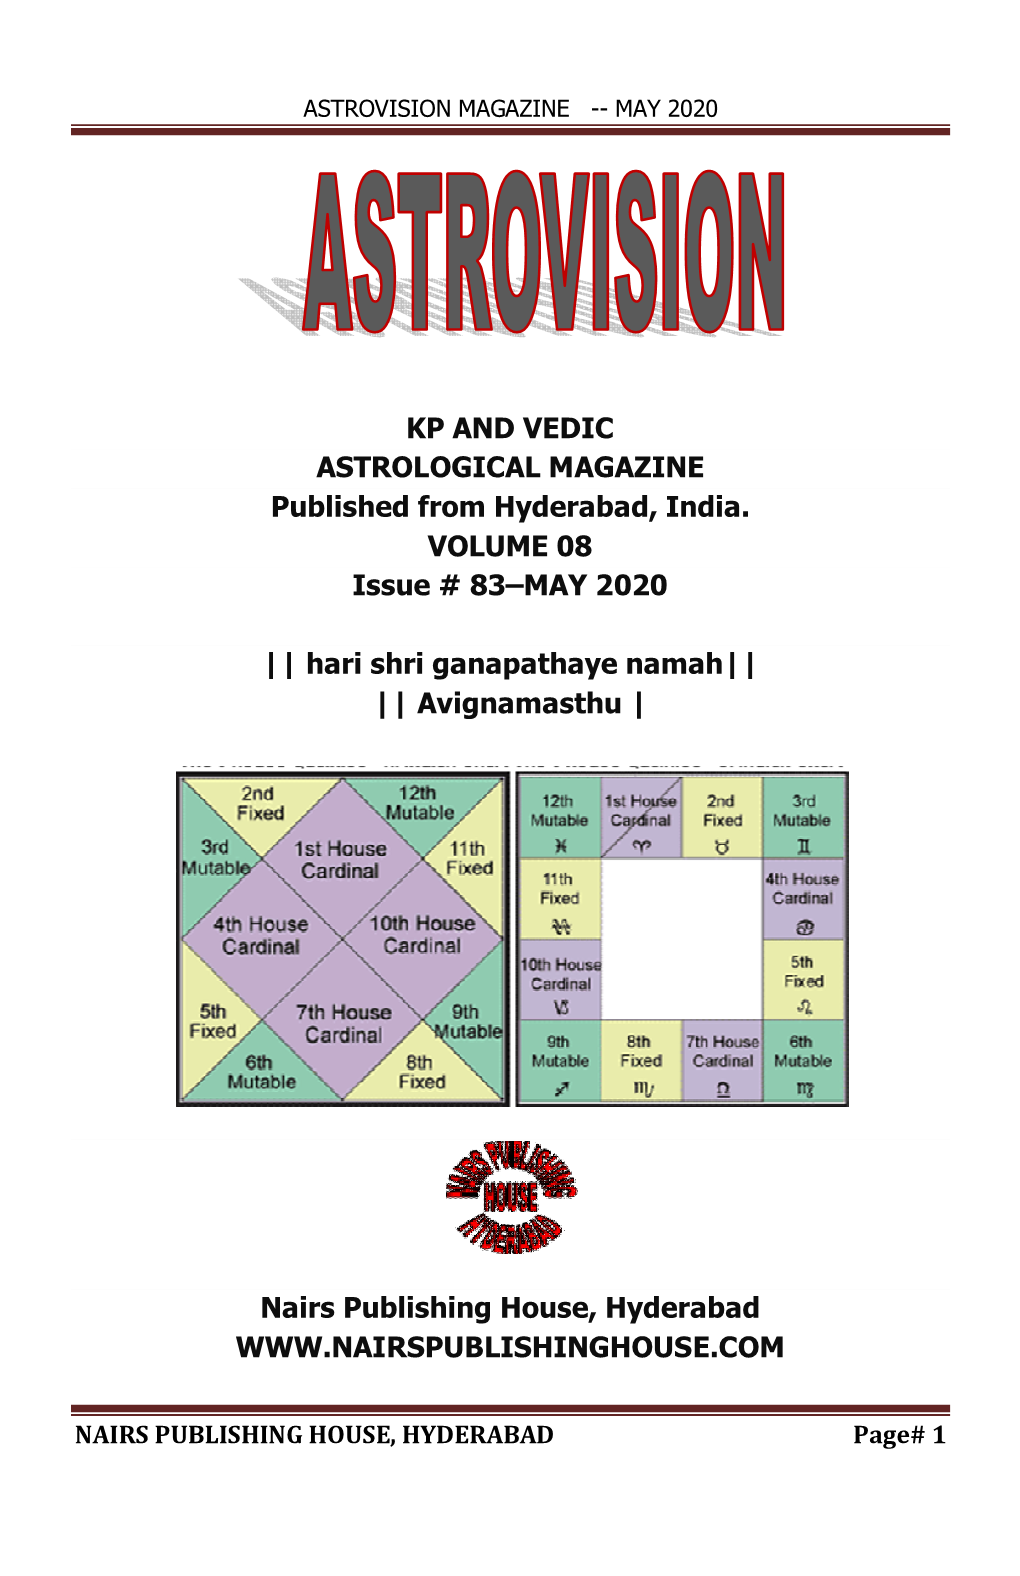 Astrovision Magazine -- May 2020